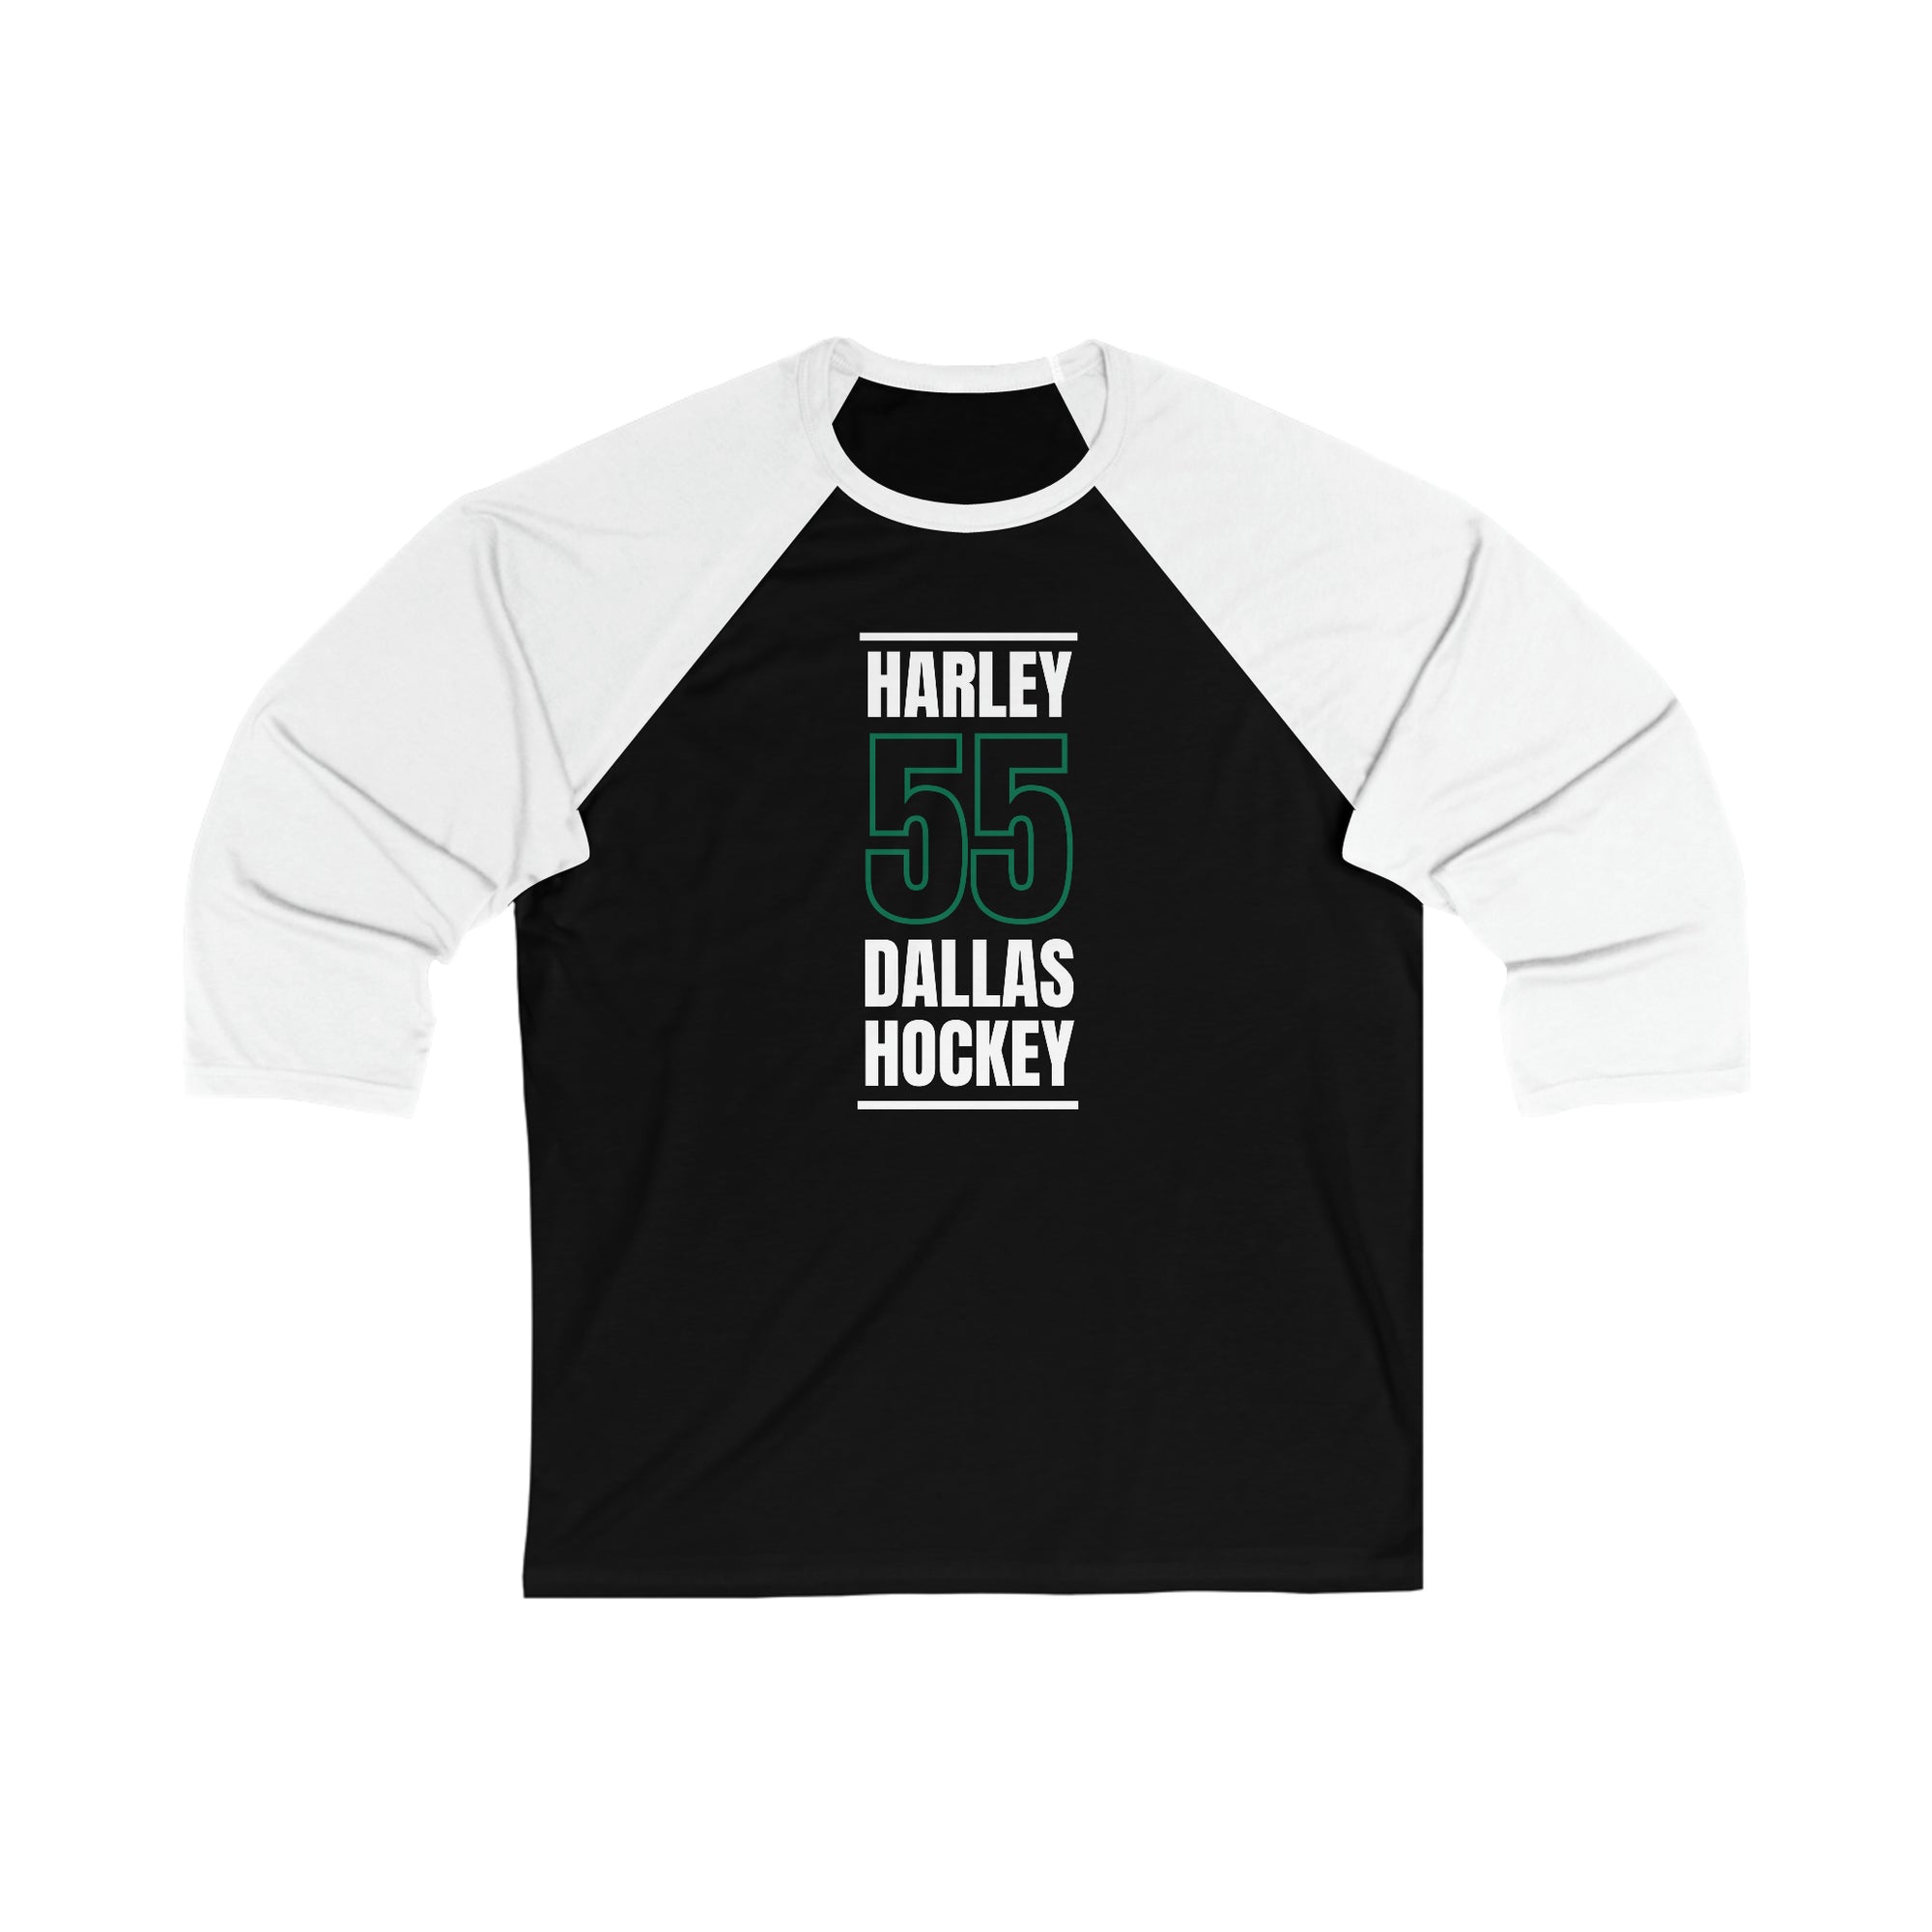 Harley 55 Dallas Hockey Black Vertical Design Unisex Tri-Blend 3/4 Sleeve Raglan Baseball Shirt